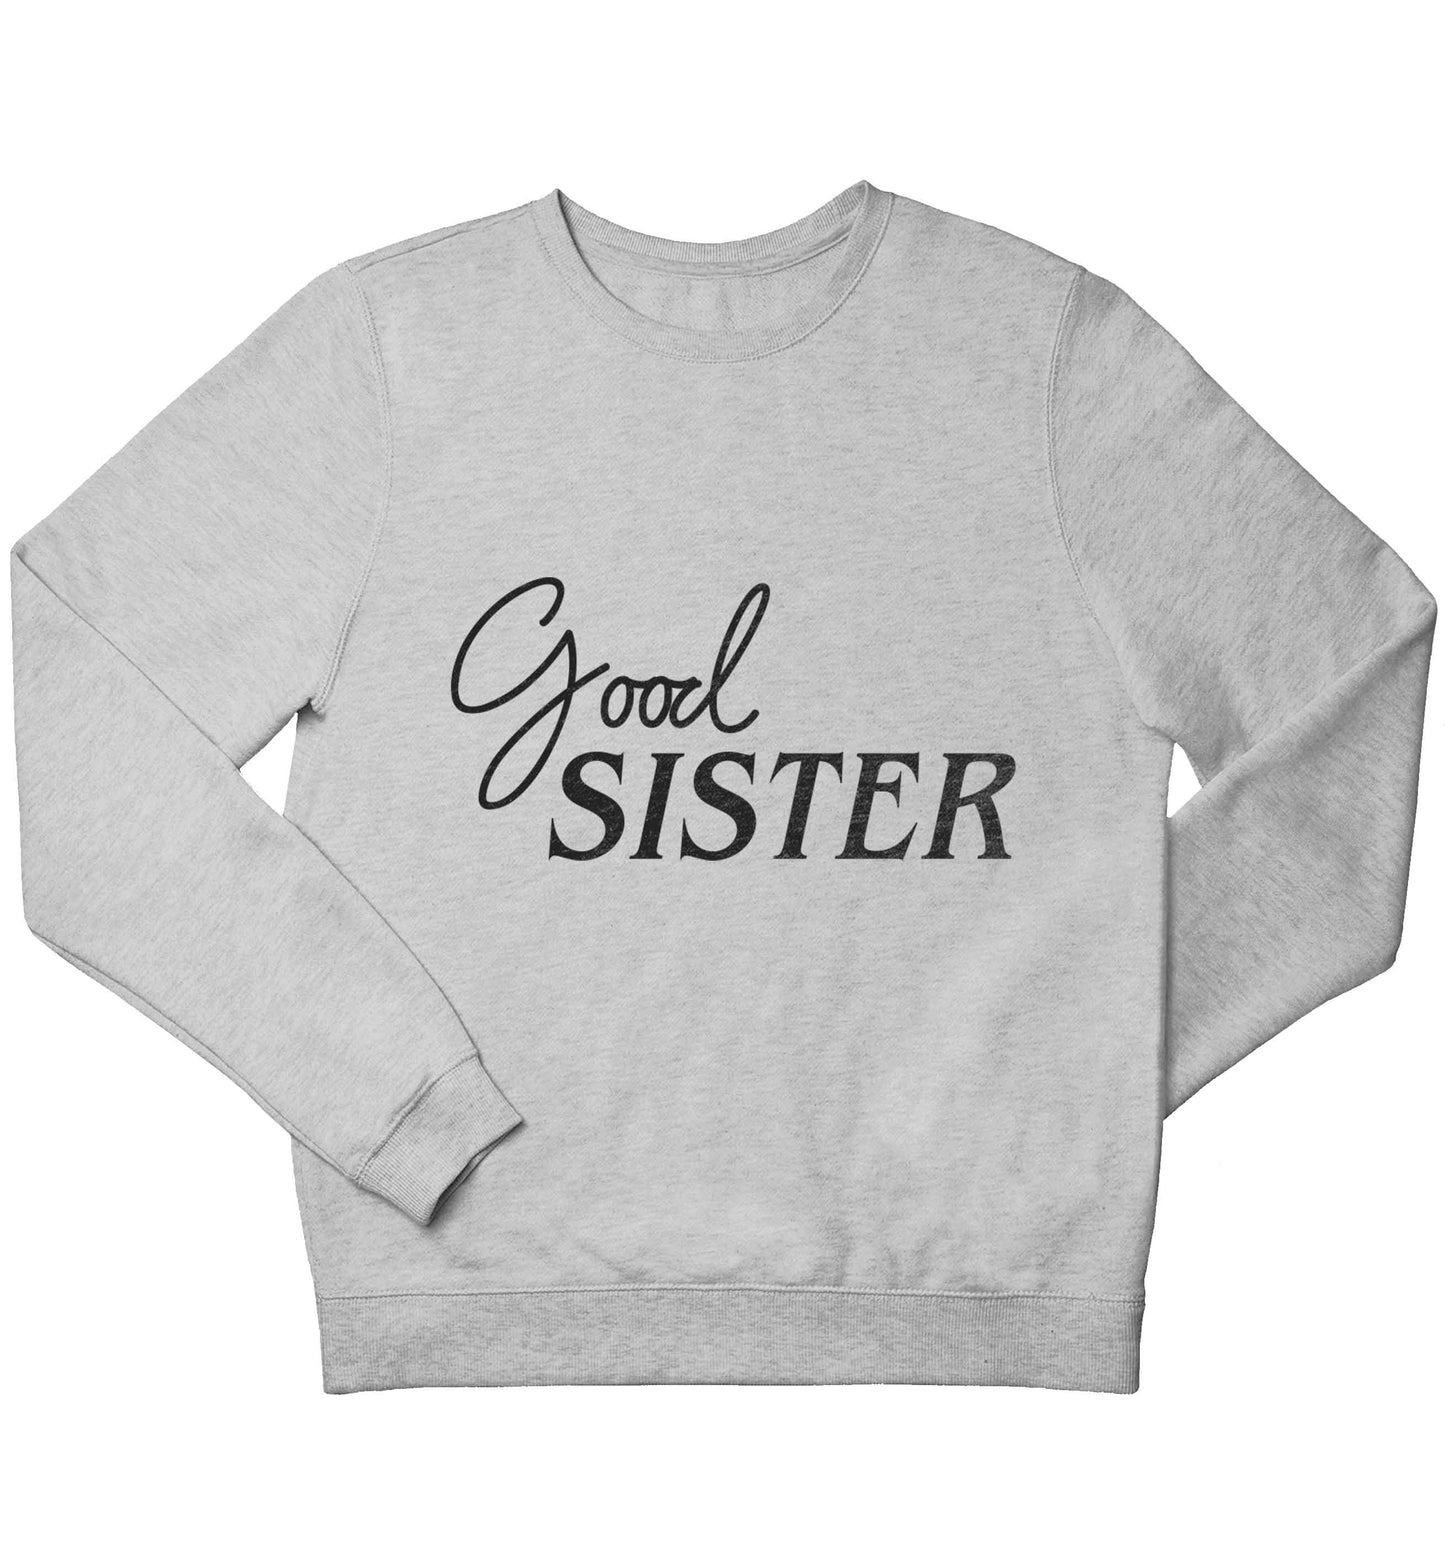 Good sister children's grey sweater 12-13 Years